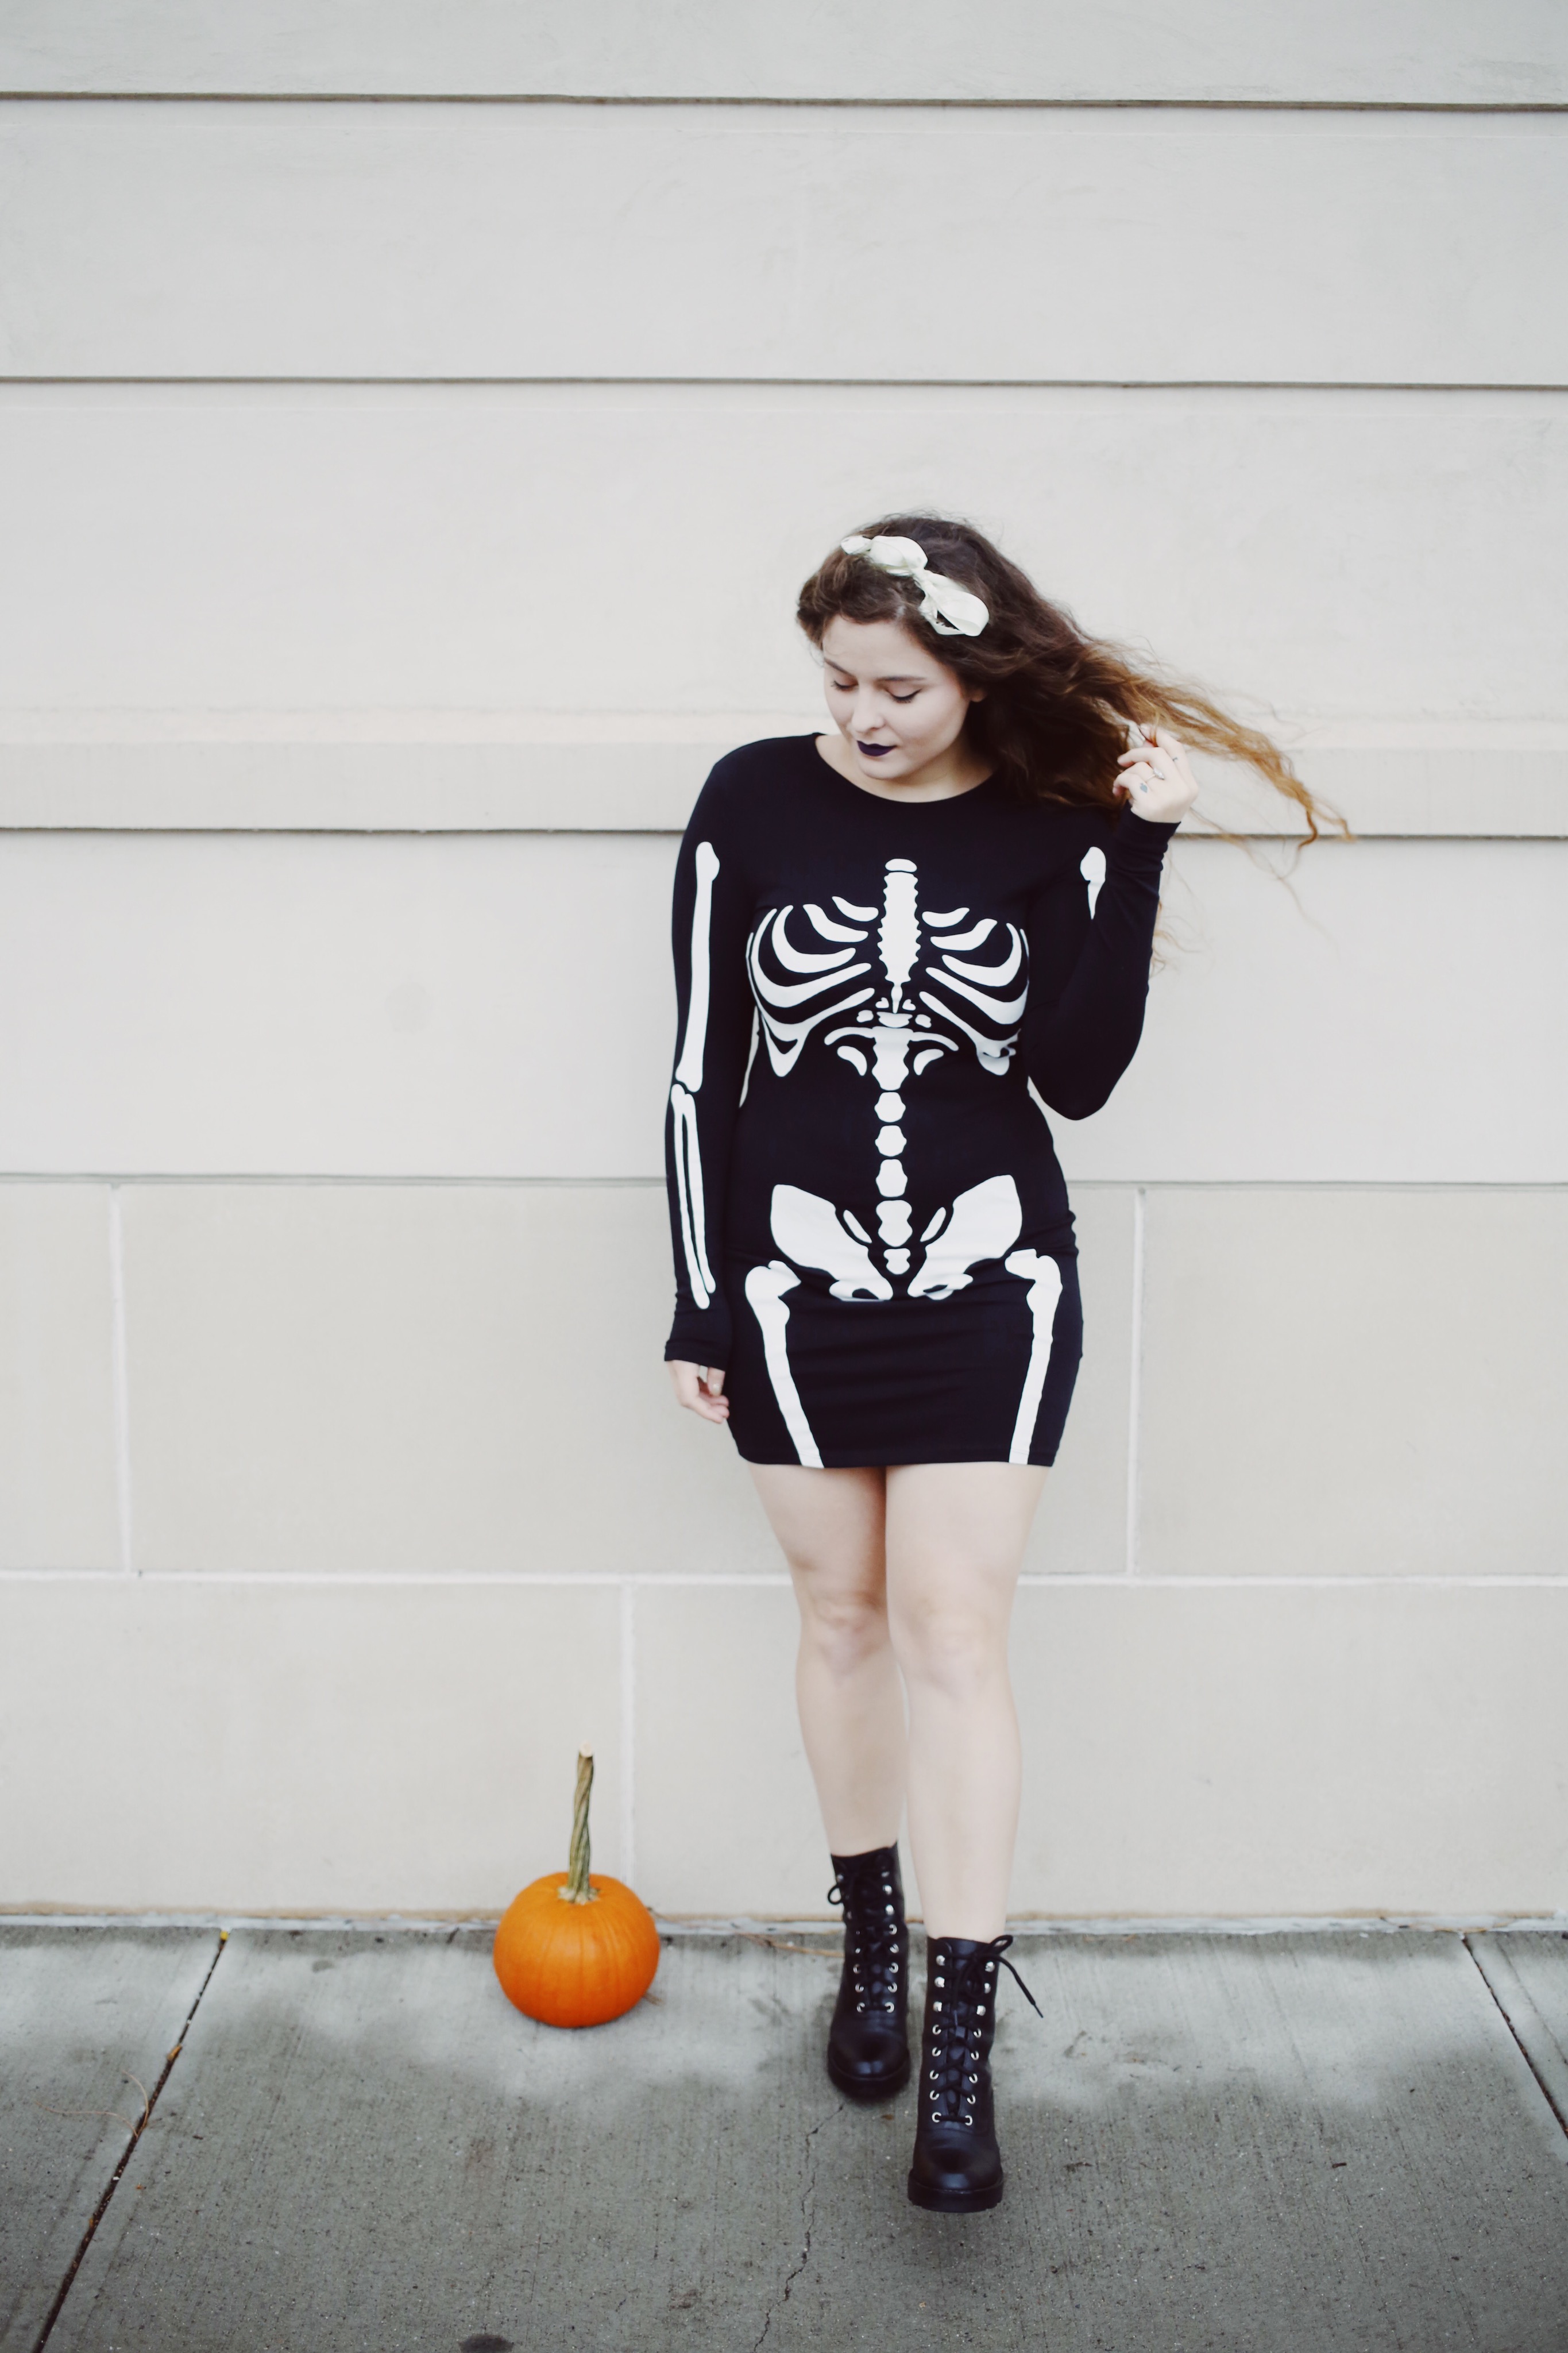 The Skeleton Dress - Noelle's Favorite Things